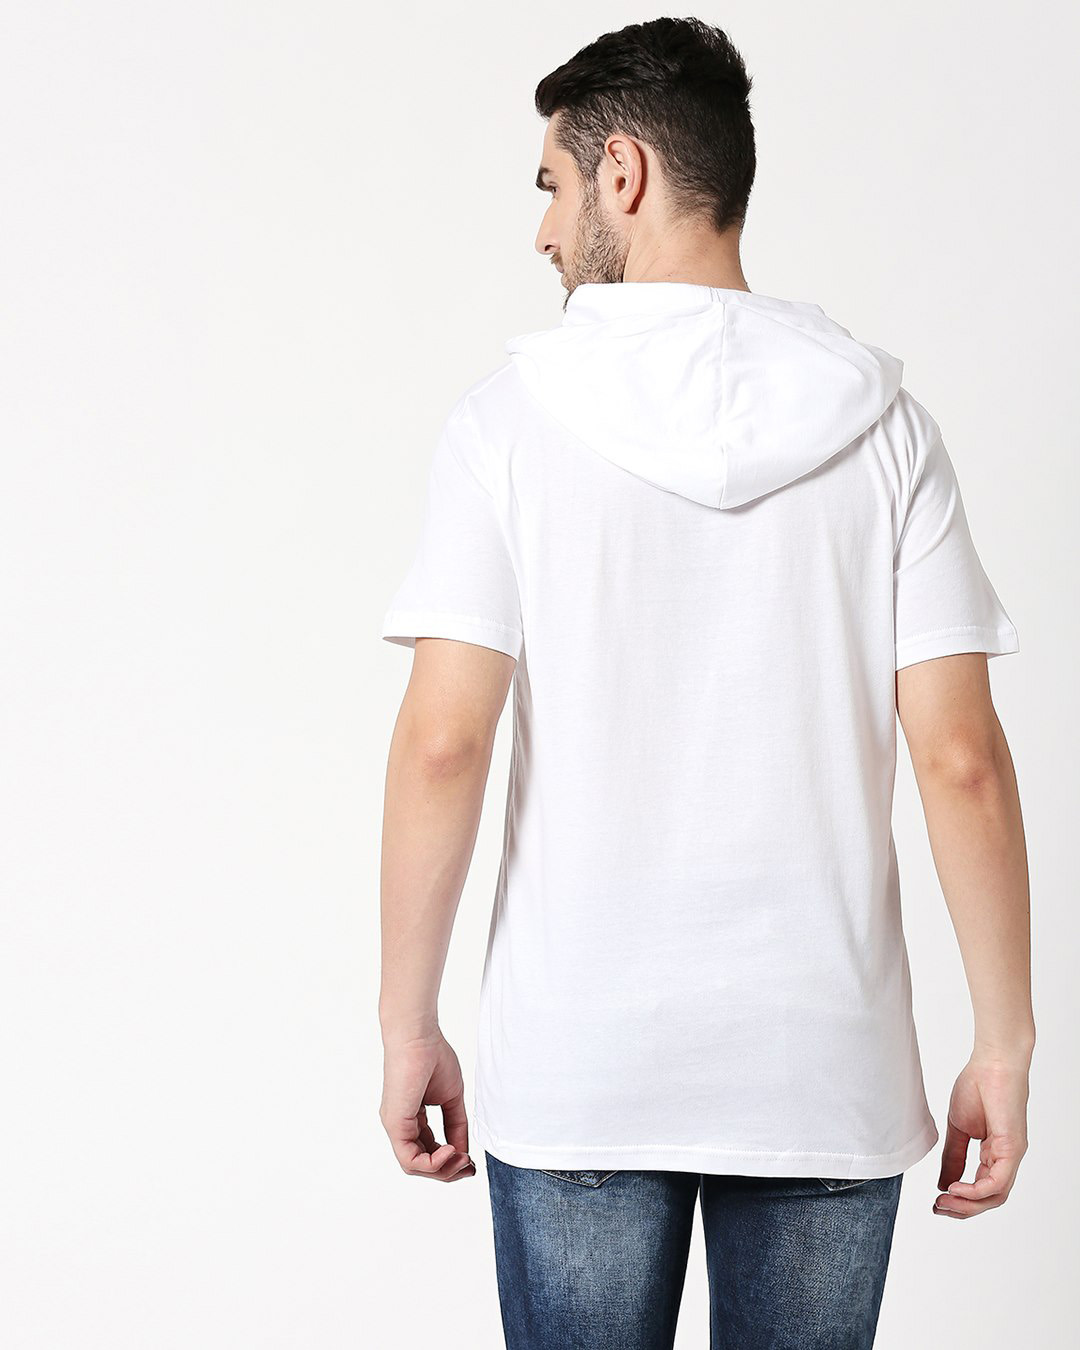 Shop World Peace Half Sleeve Hoodie T-Shirt White-Back